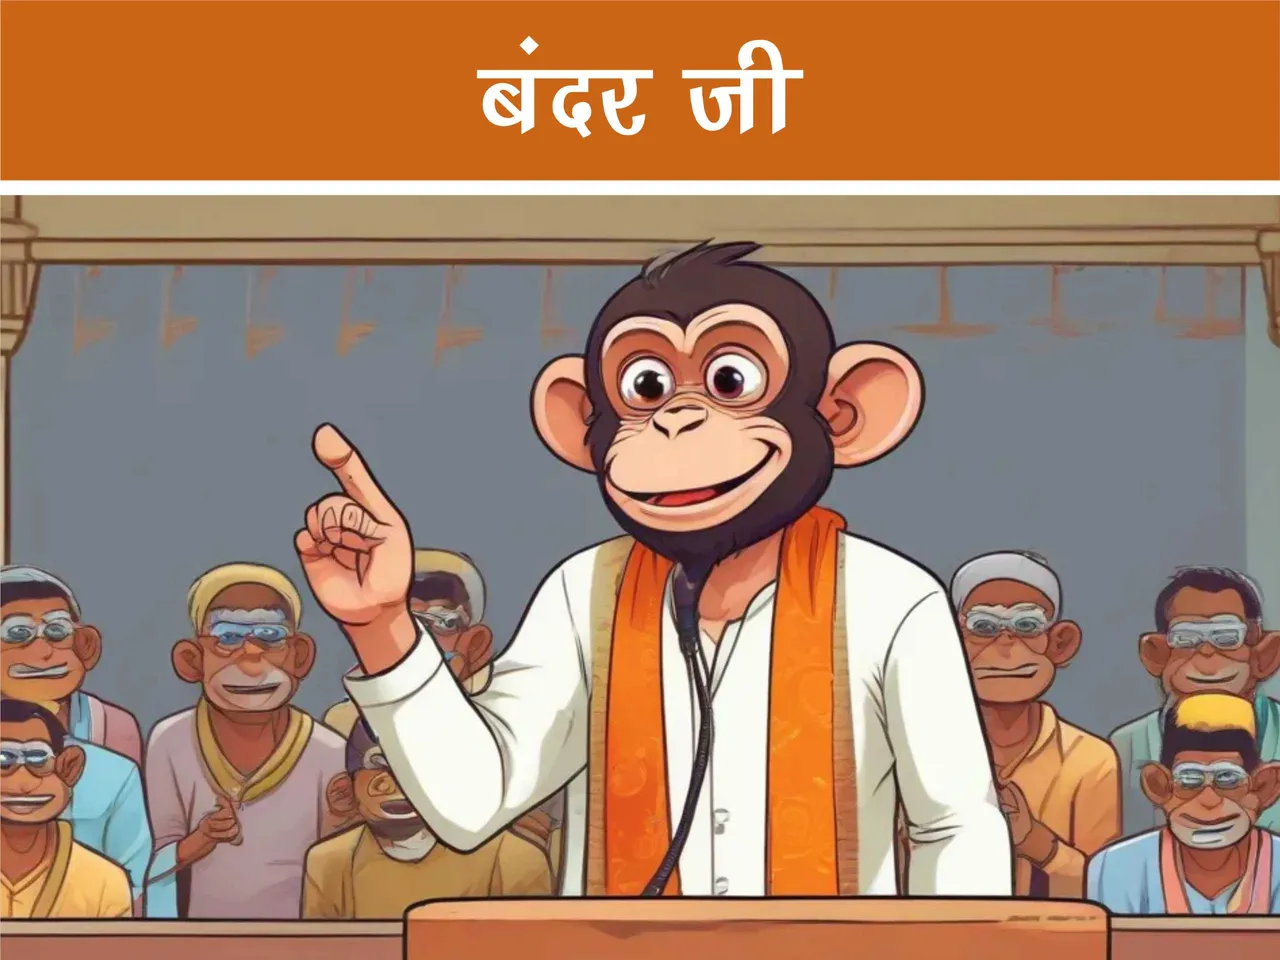 Monkey giving speech cartoon image